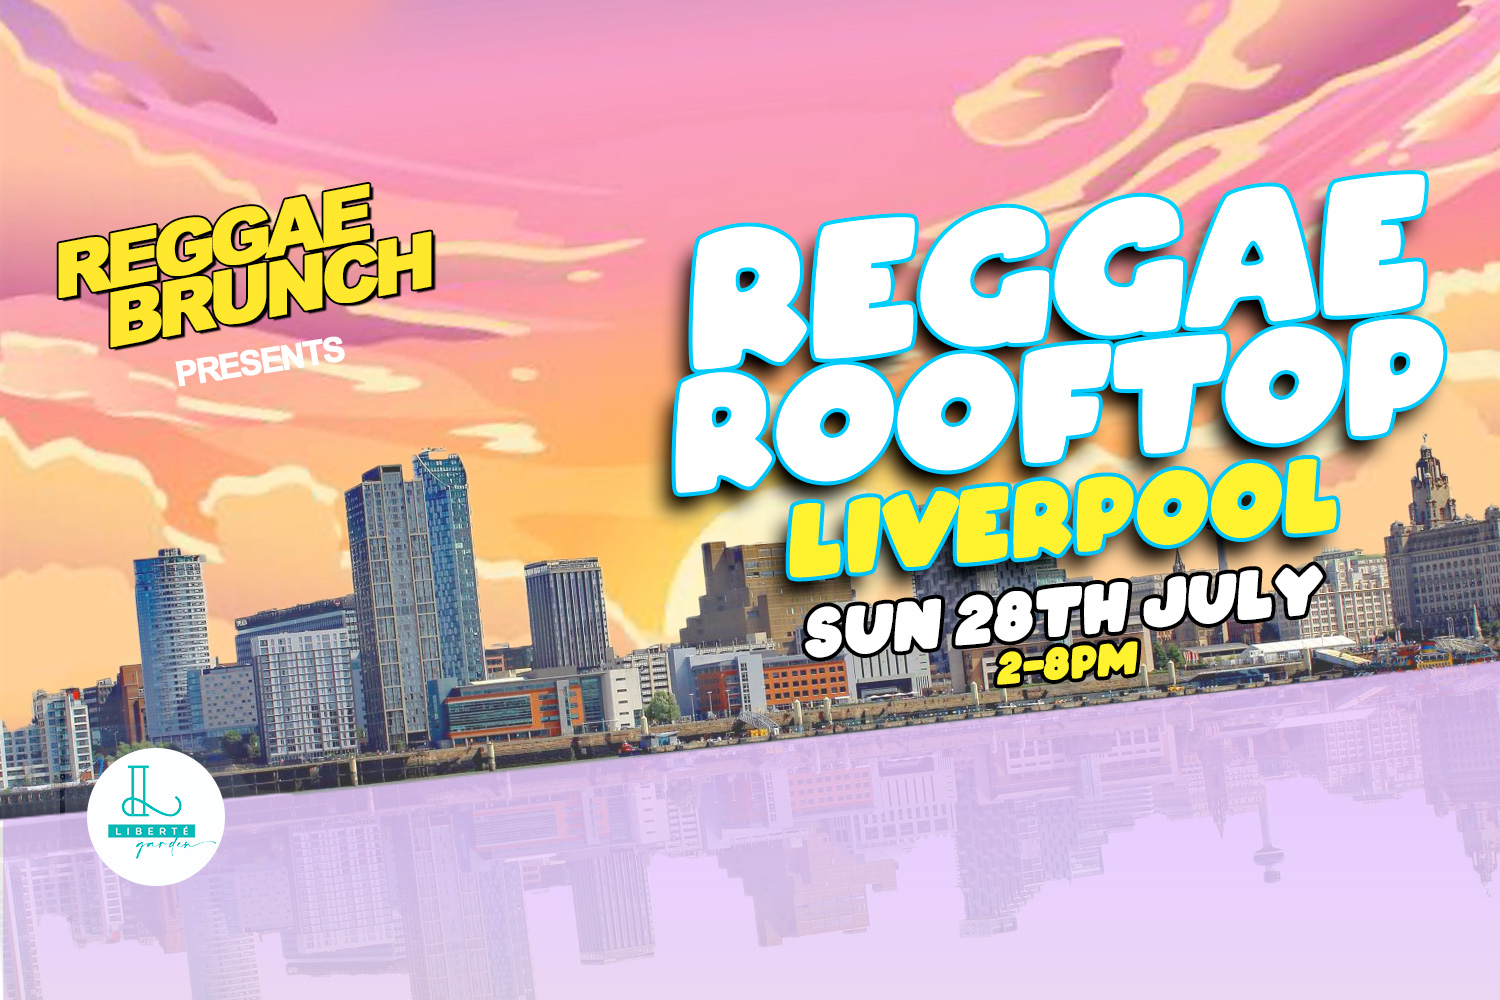 Sun, 28th July | Reggae Rooftop Liverpool